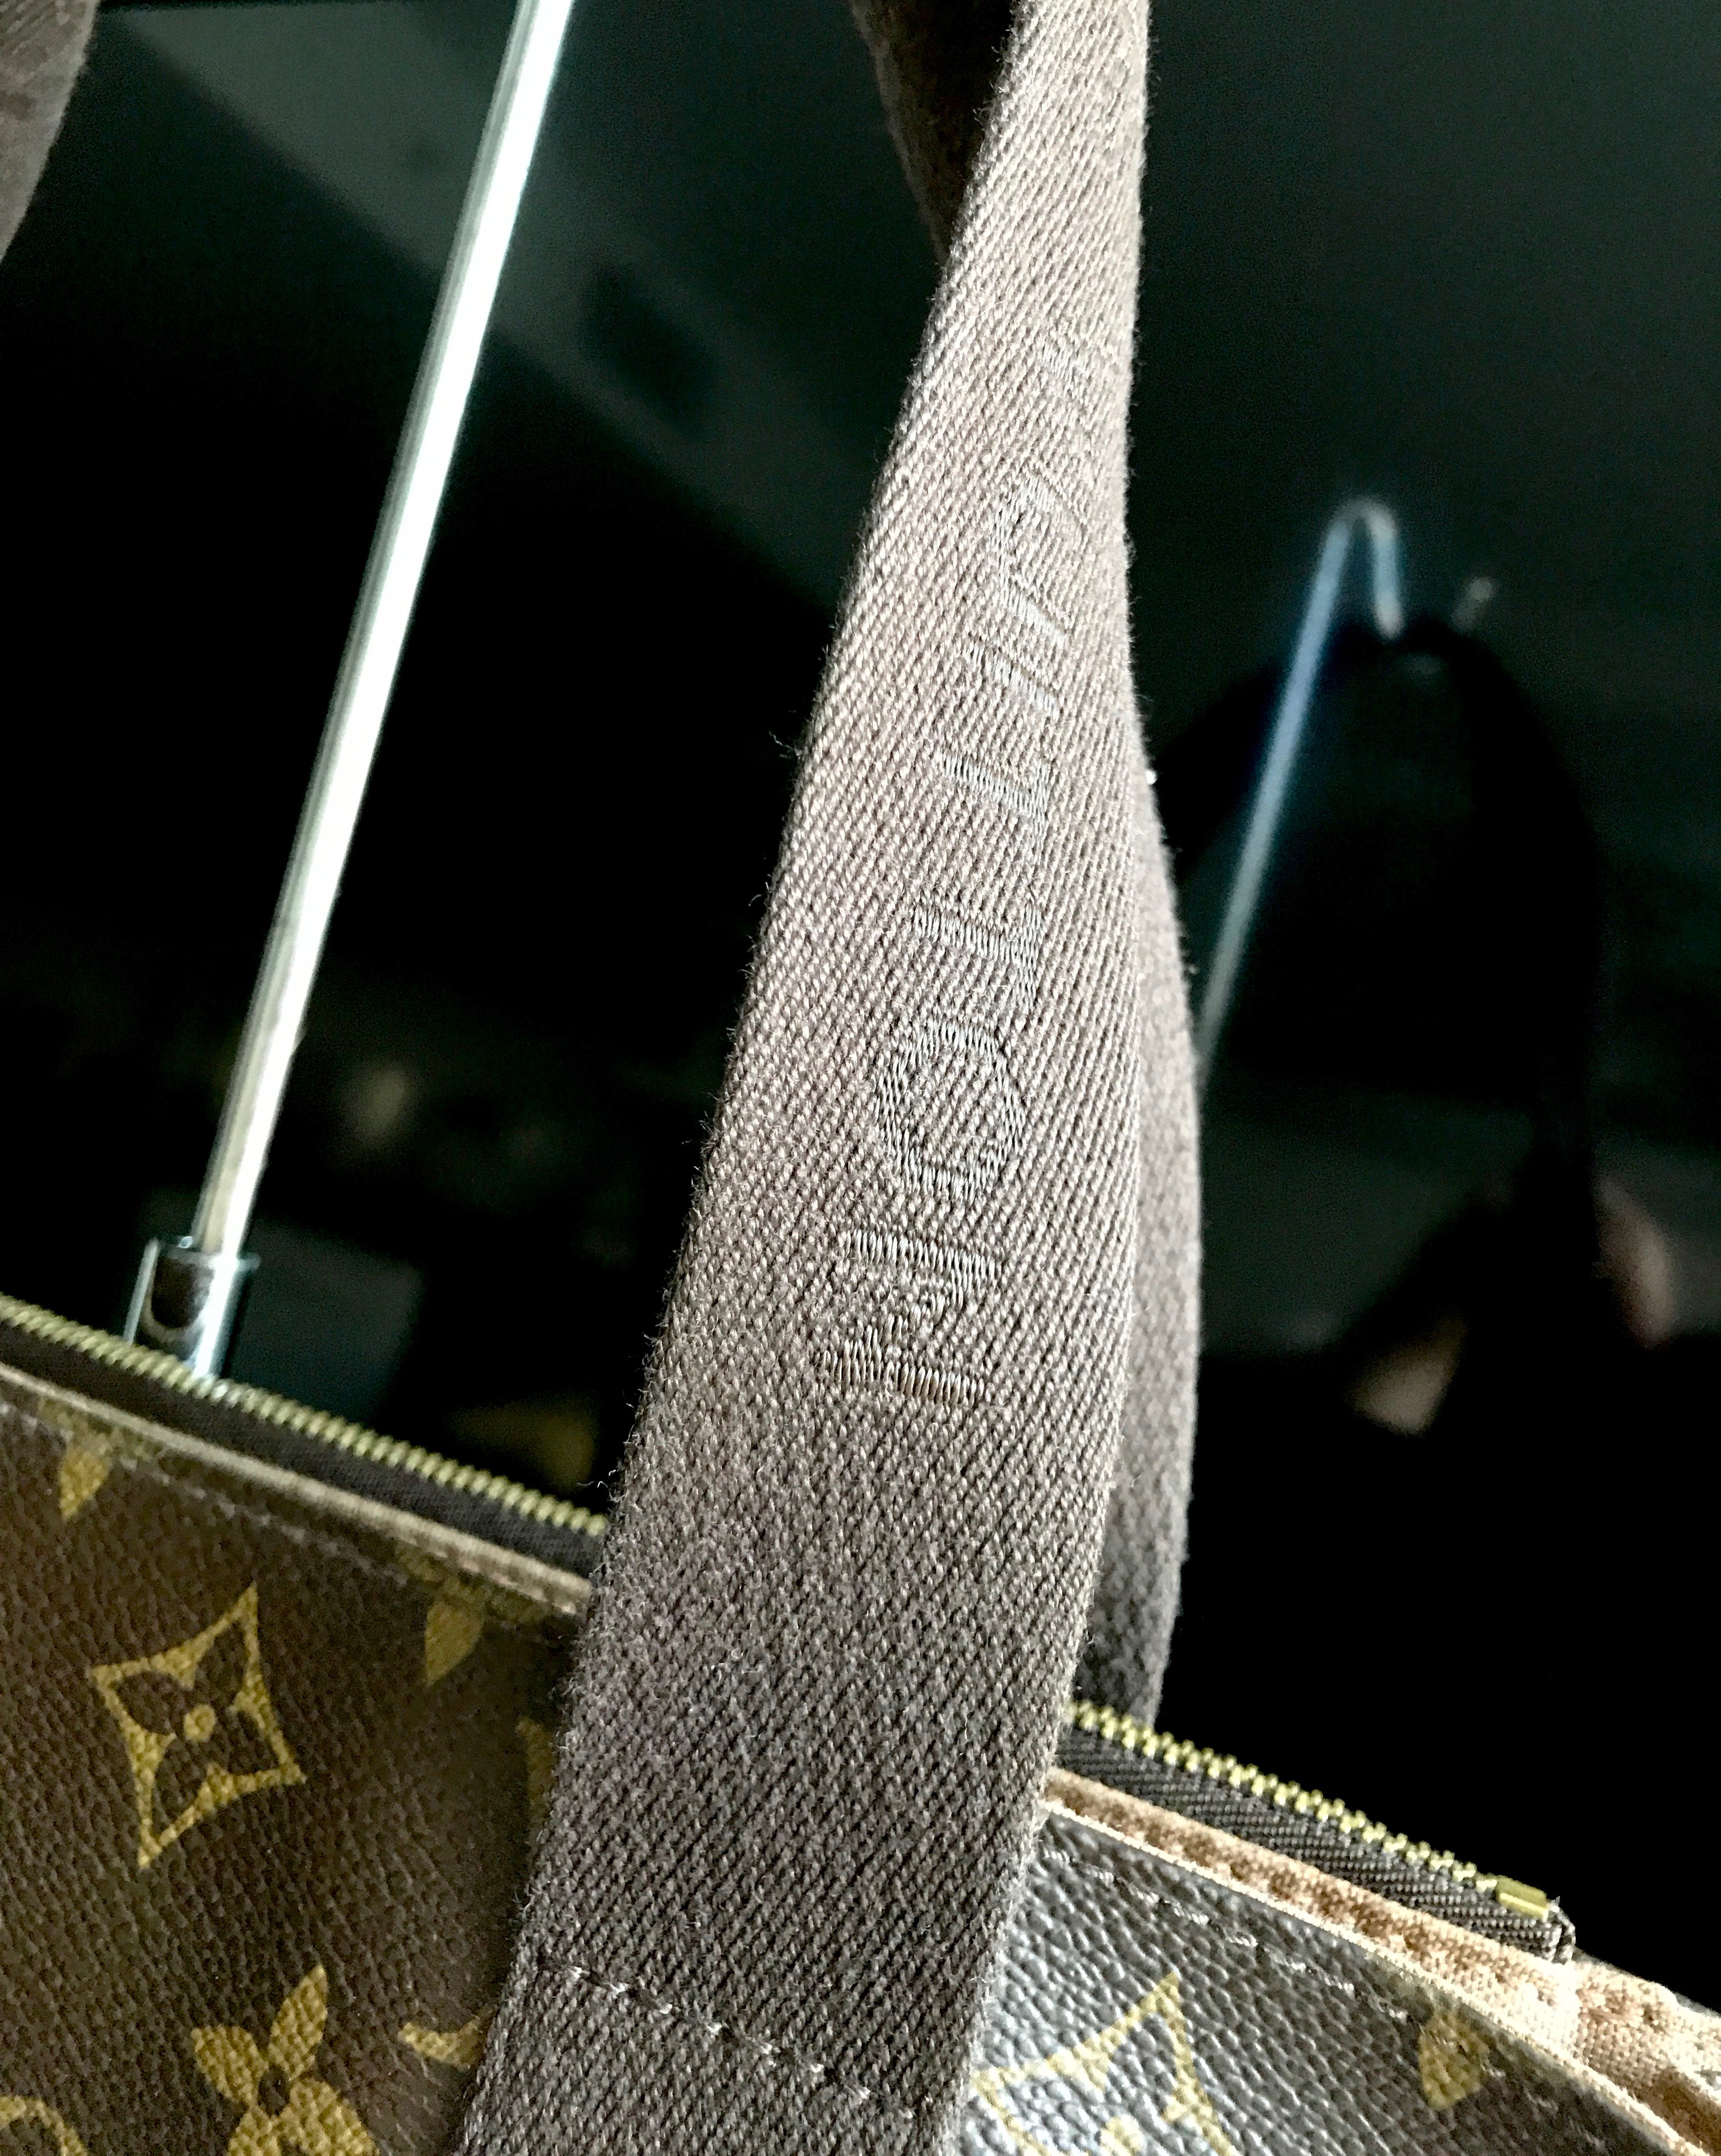 Authentic Louis Vuitton Monogram Cabas Beaubourg Tote Bag M53013